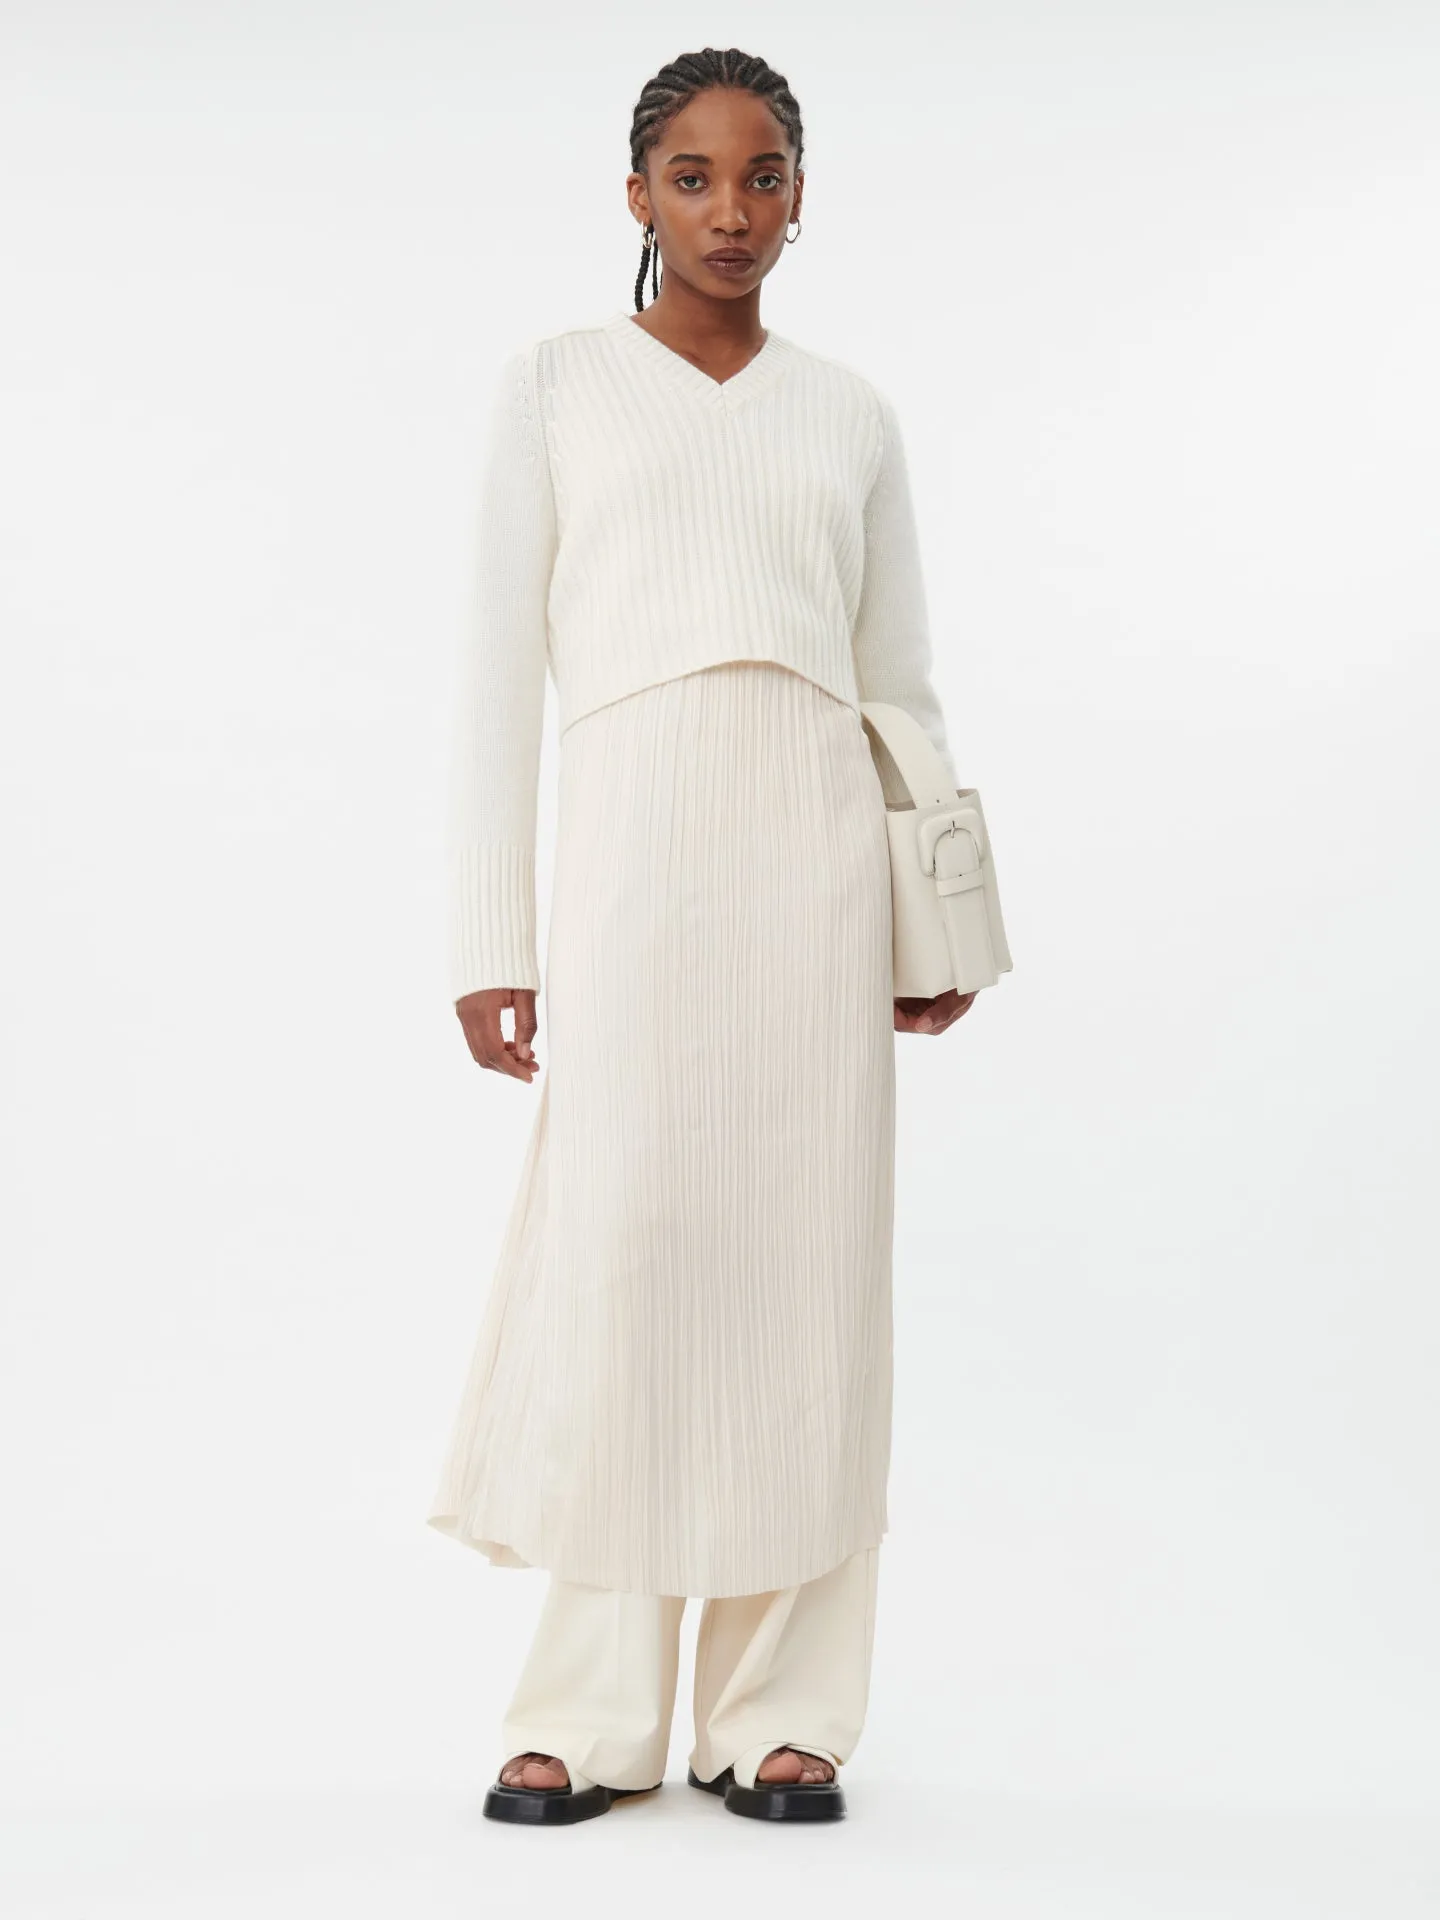 Women's Cashmere Rib Knitted V-Neck Sweater White - Gobi Cashmere